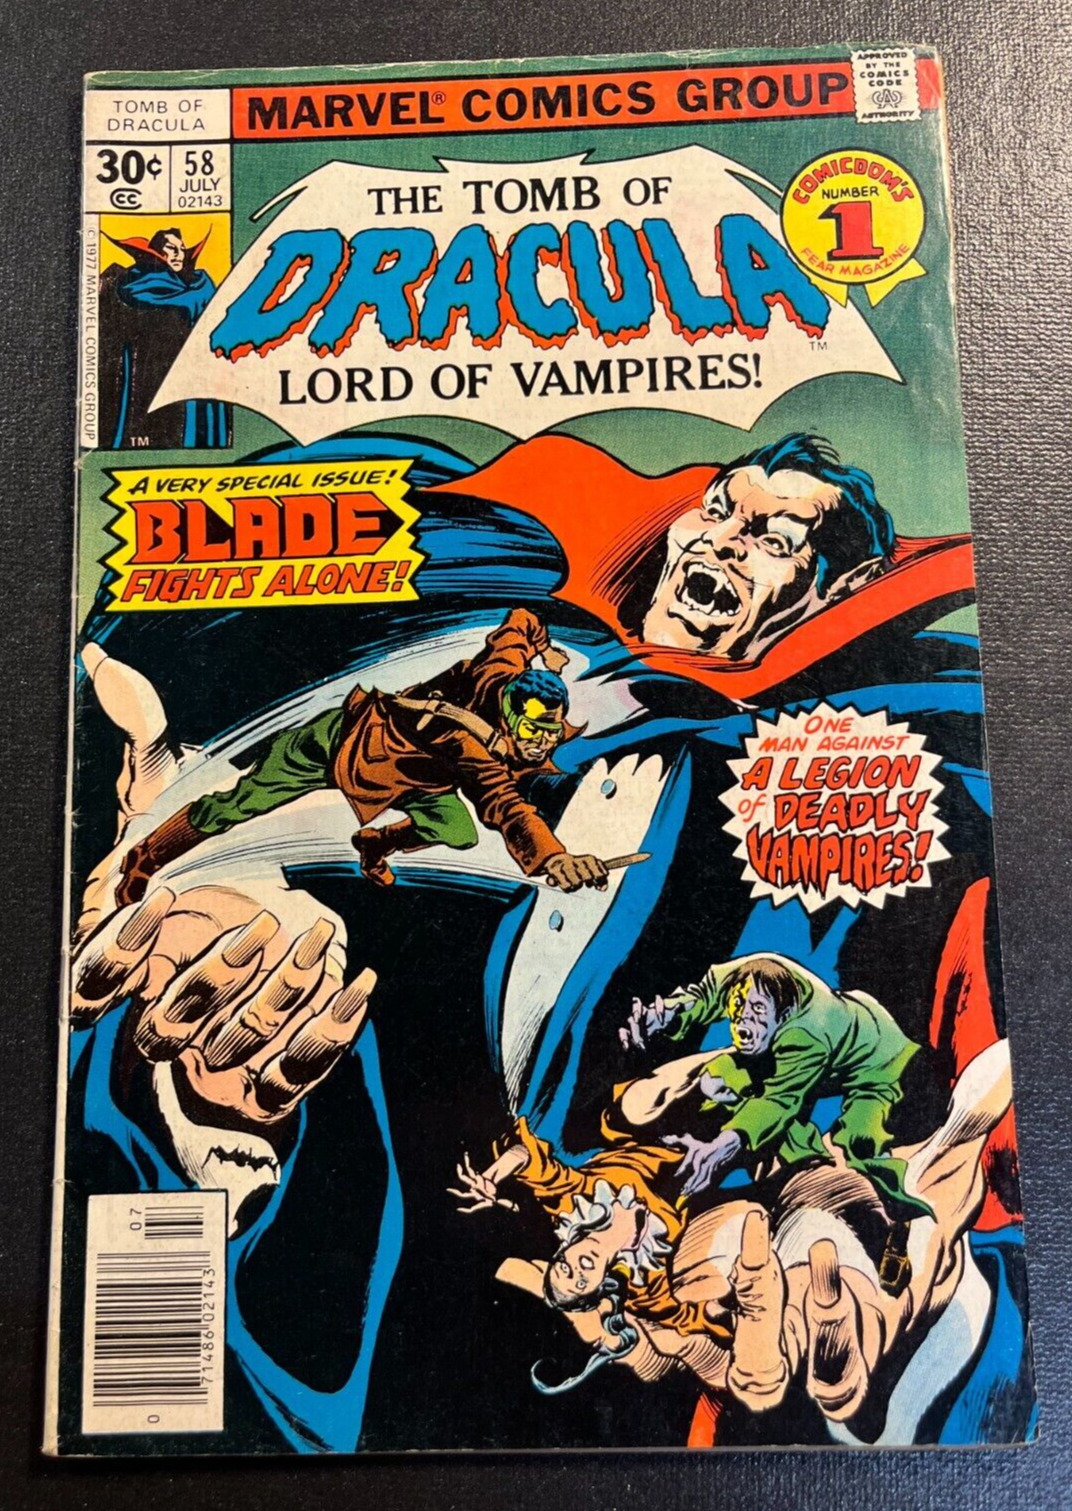 Tomb of Dracula 58 BLADE SOLO ISSUE 1977 Vol 1 Gene Colan Vampires VINTAGE COMIC